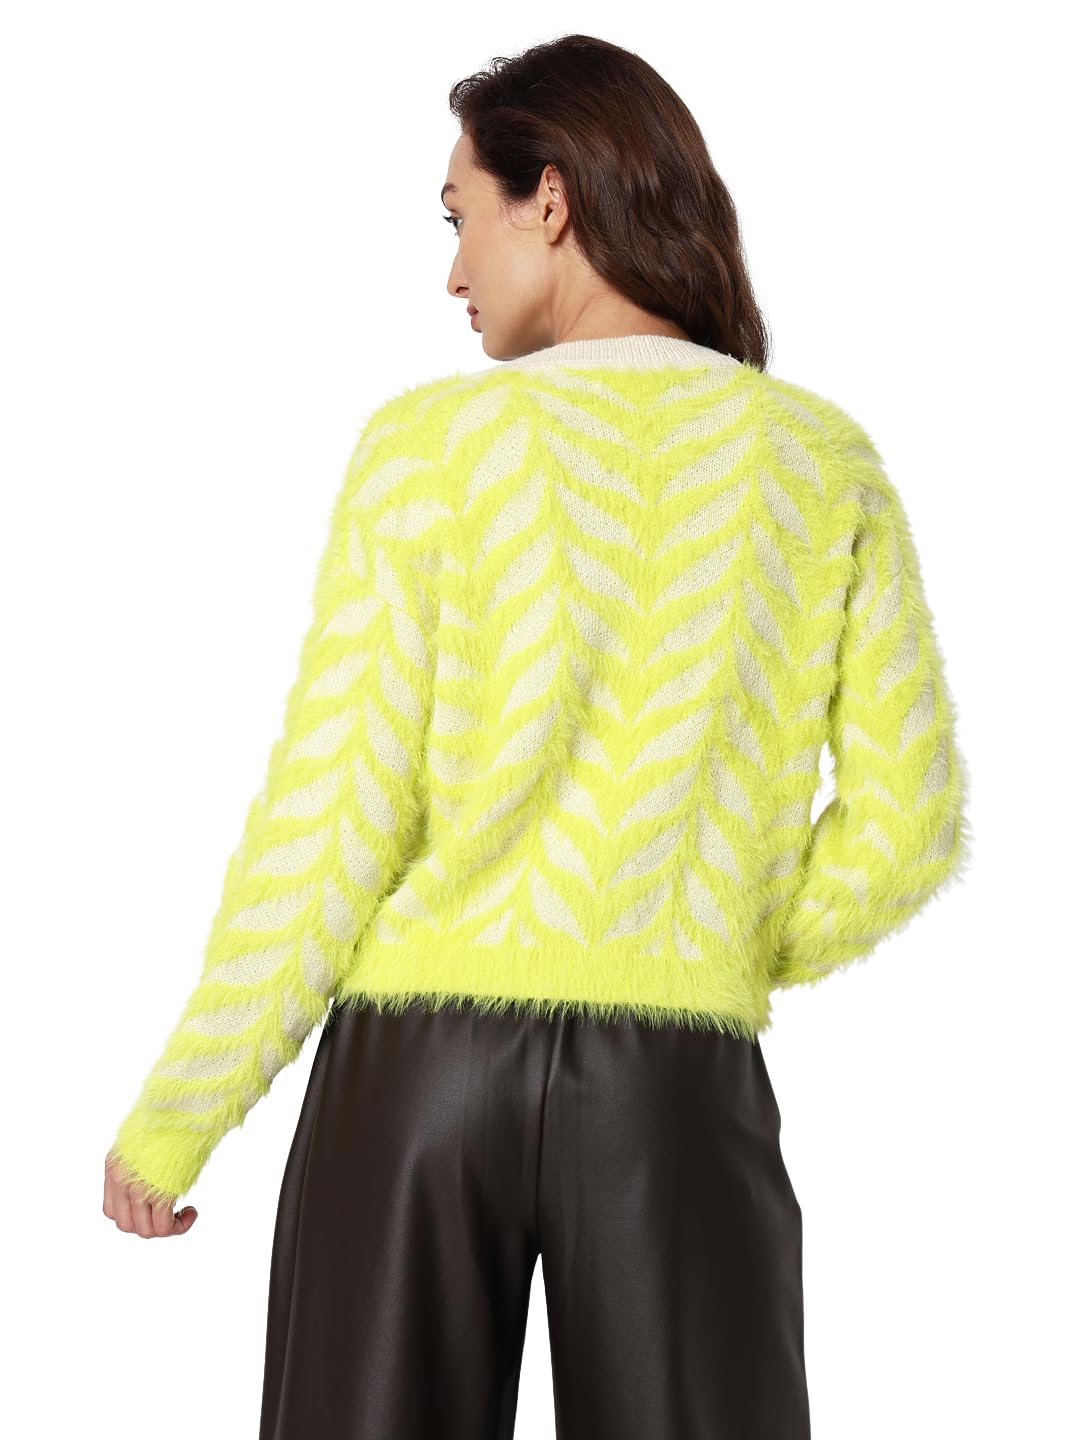 VERO MODA Women's Nylon Round Neck Sweater (10291027- Birch